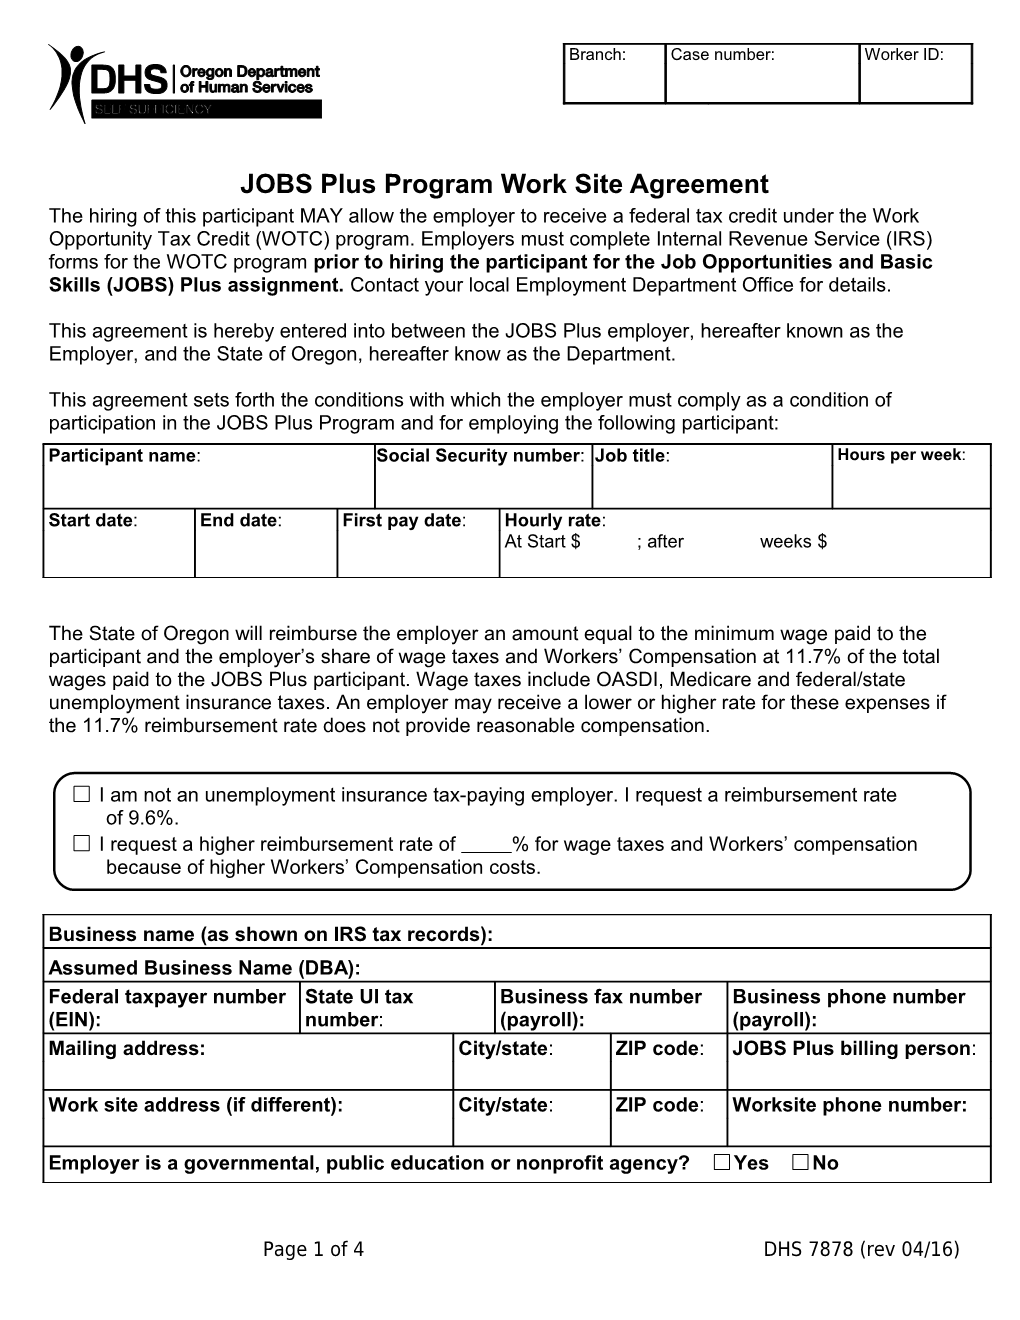 JOBS Plus Program Work Site Agreement